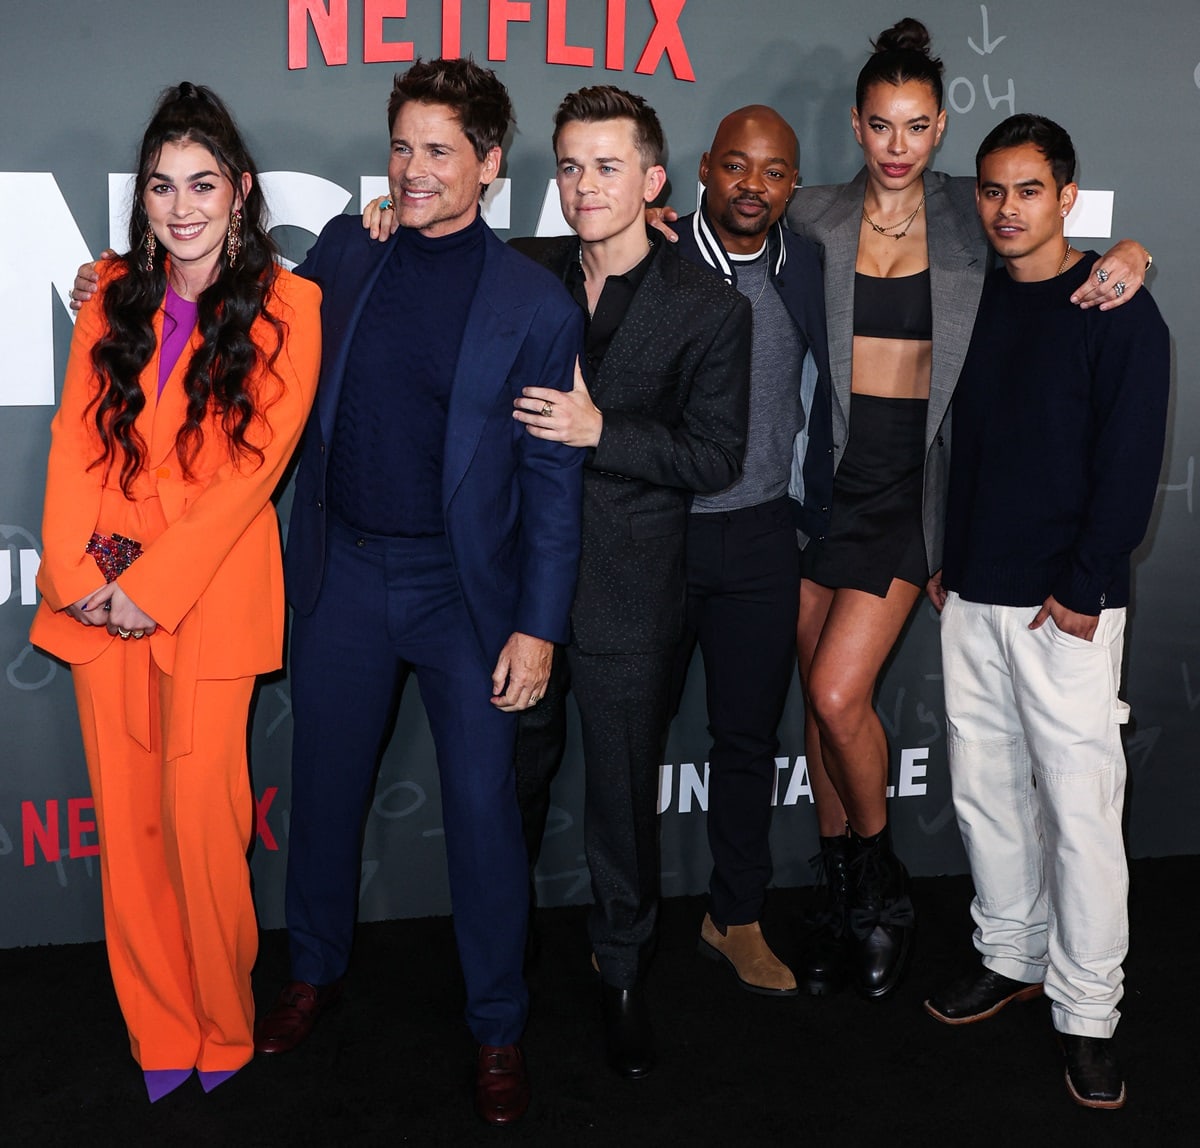 Natacha Karam, Rob Lowe, John Owen Lowe, Brian Michael Smith, Brianna Baker, and Julian Works attend the Netflix Unstable S1 premiere